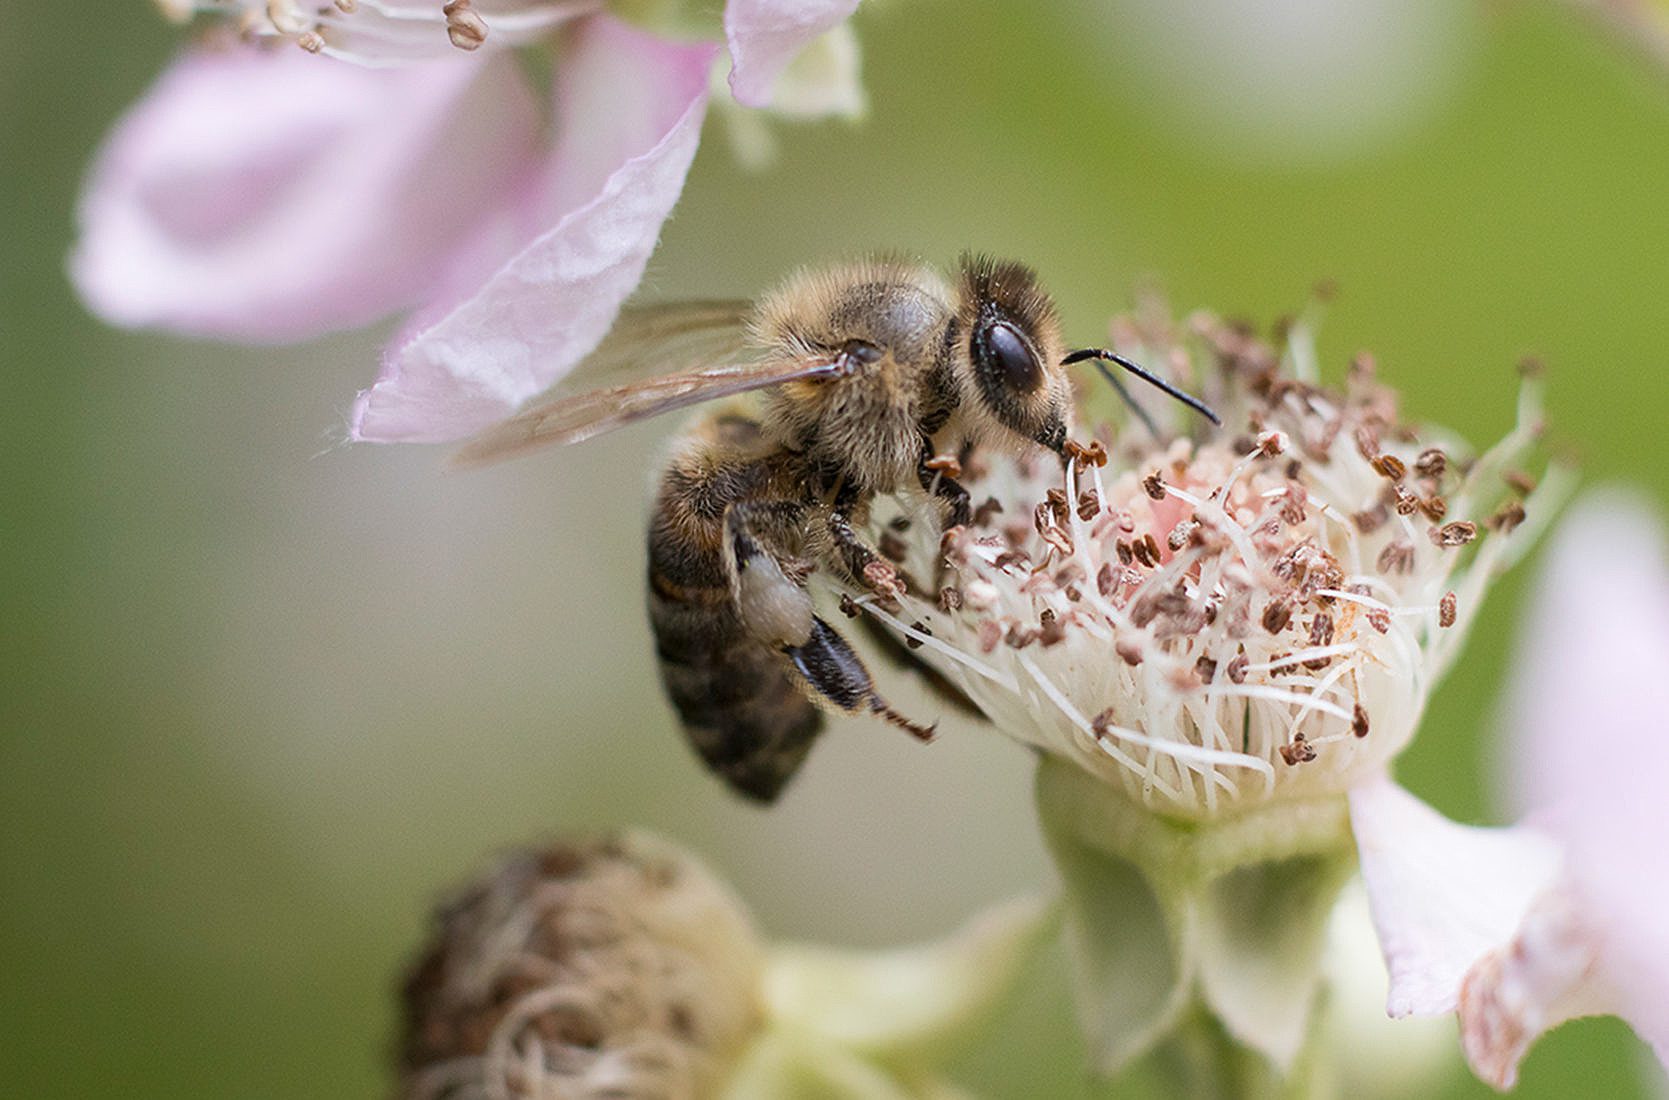 Establish wild bees